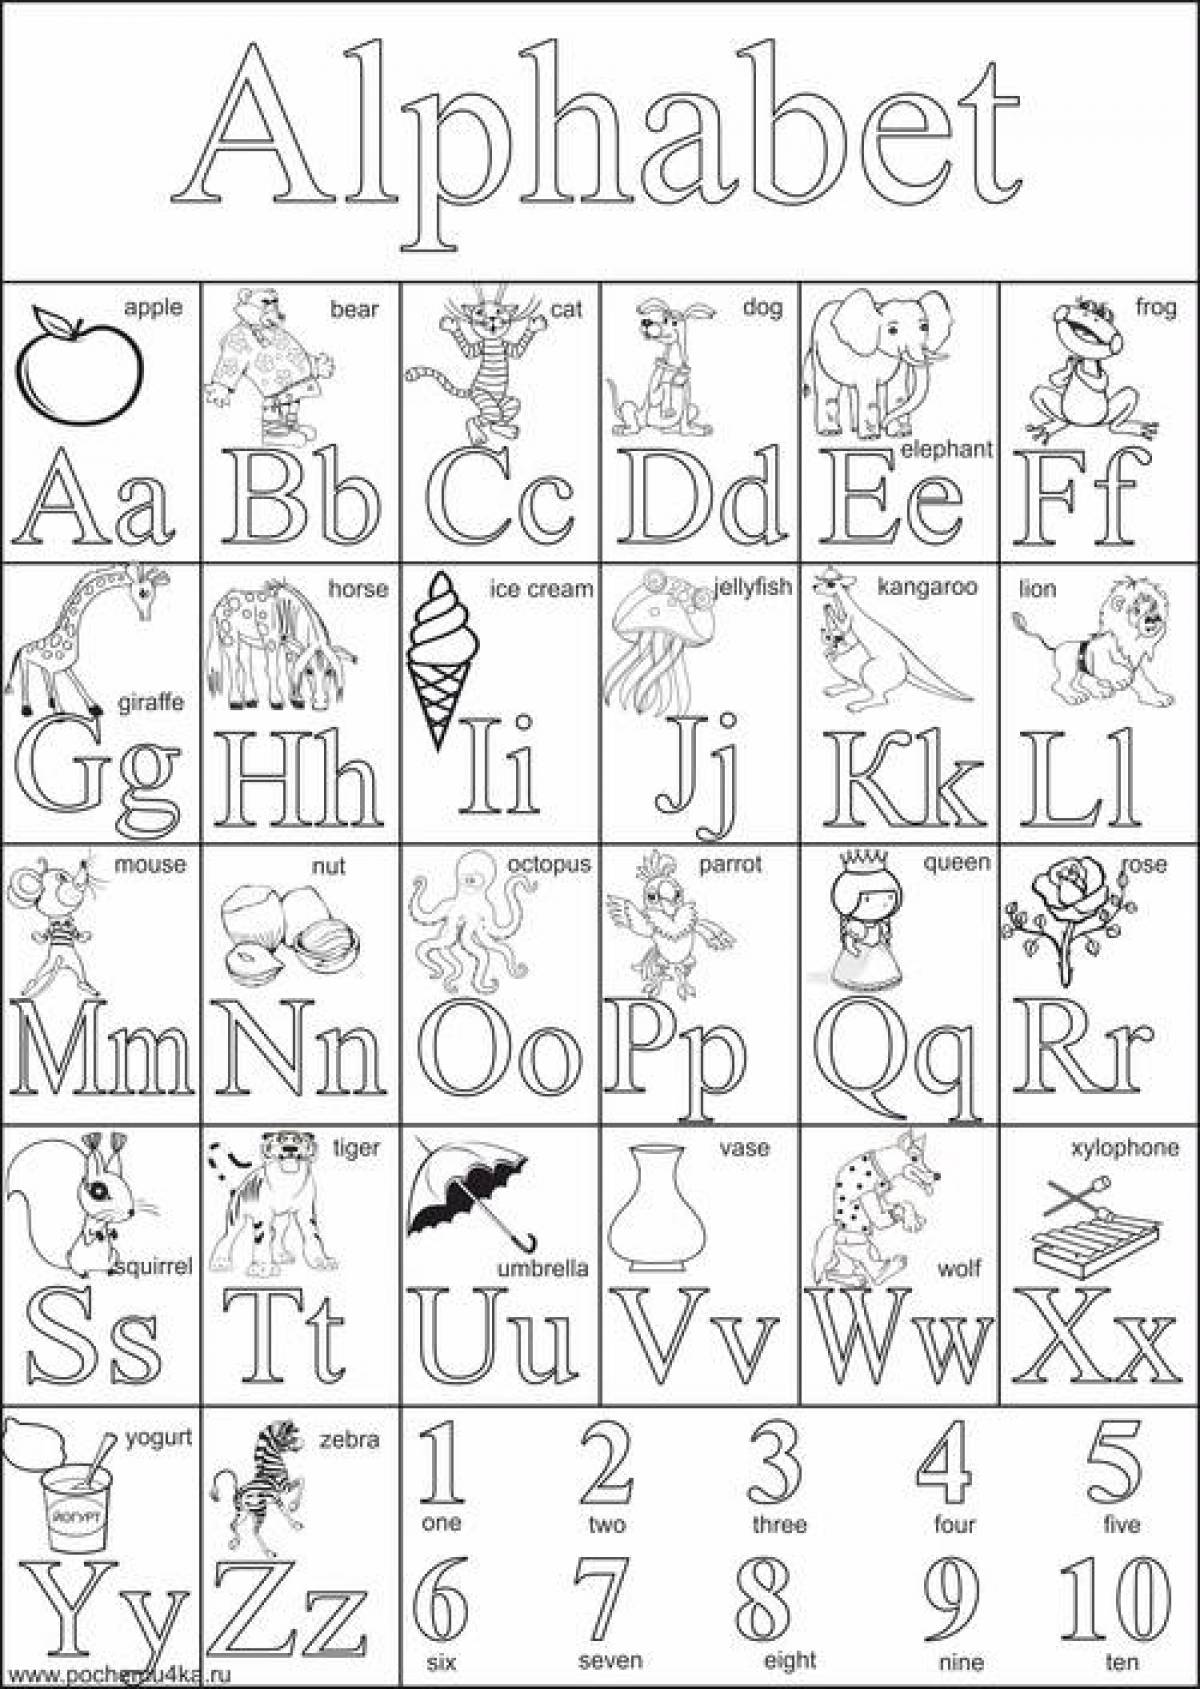 English alphabet for children grade 2 #19